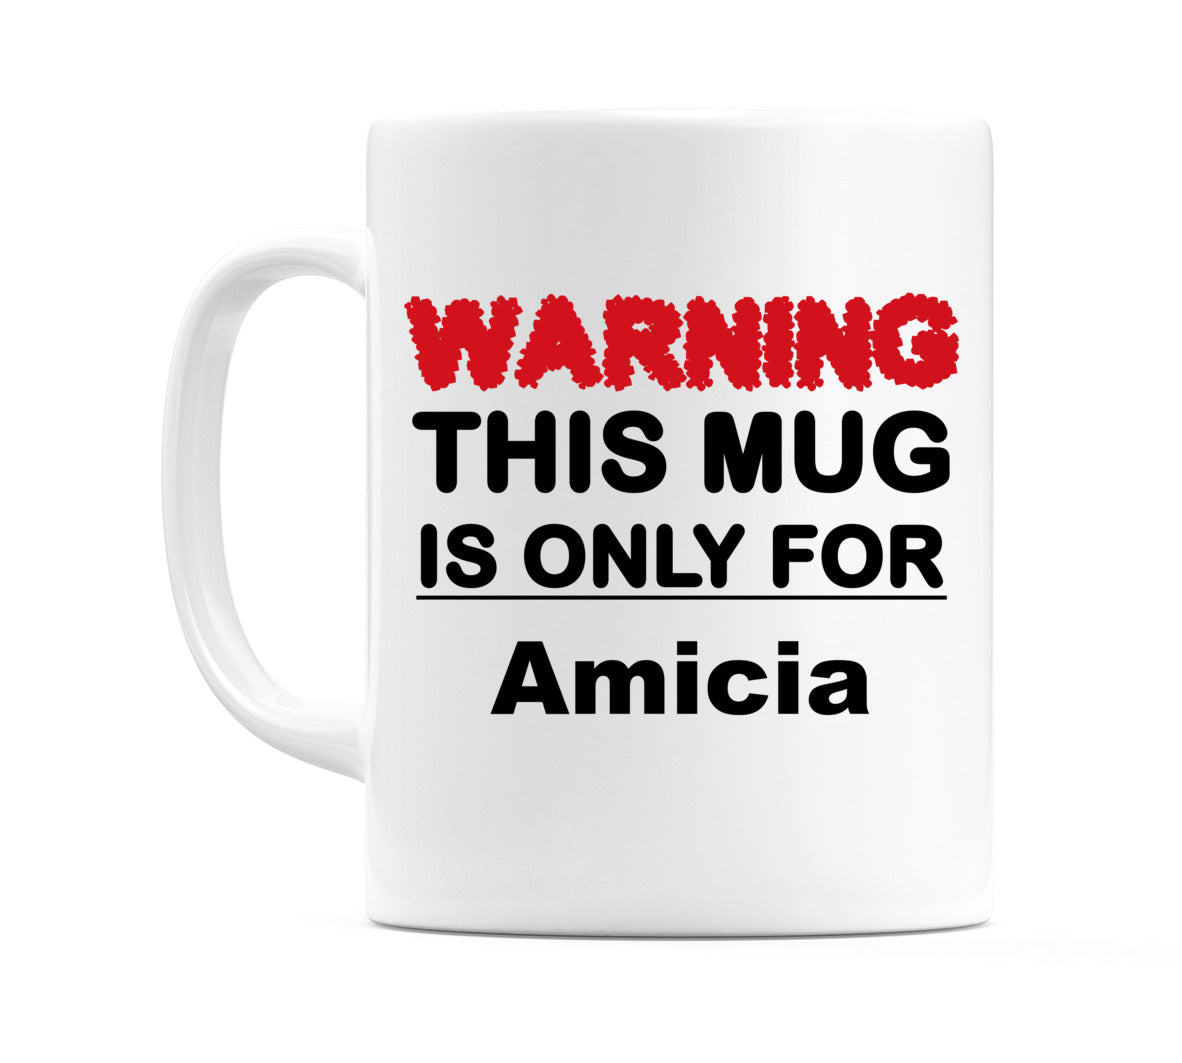 Warning This Mug is ONLY for Amicia Mug